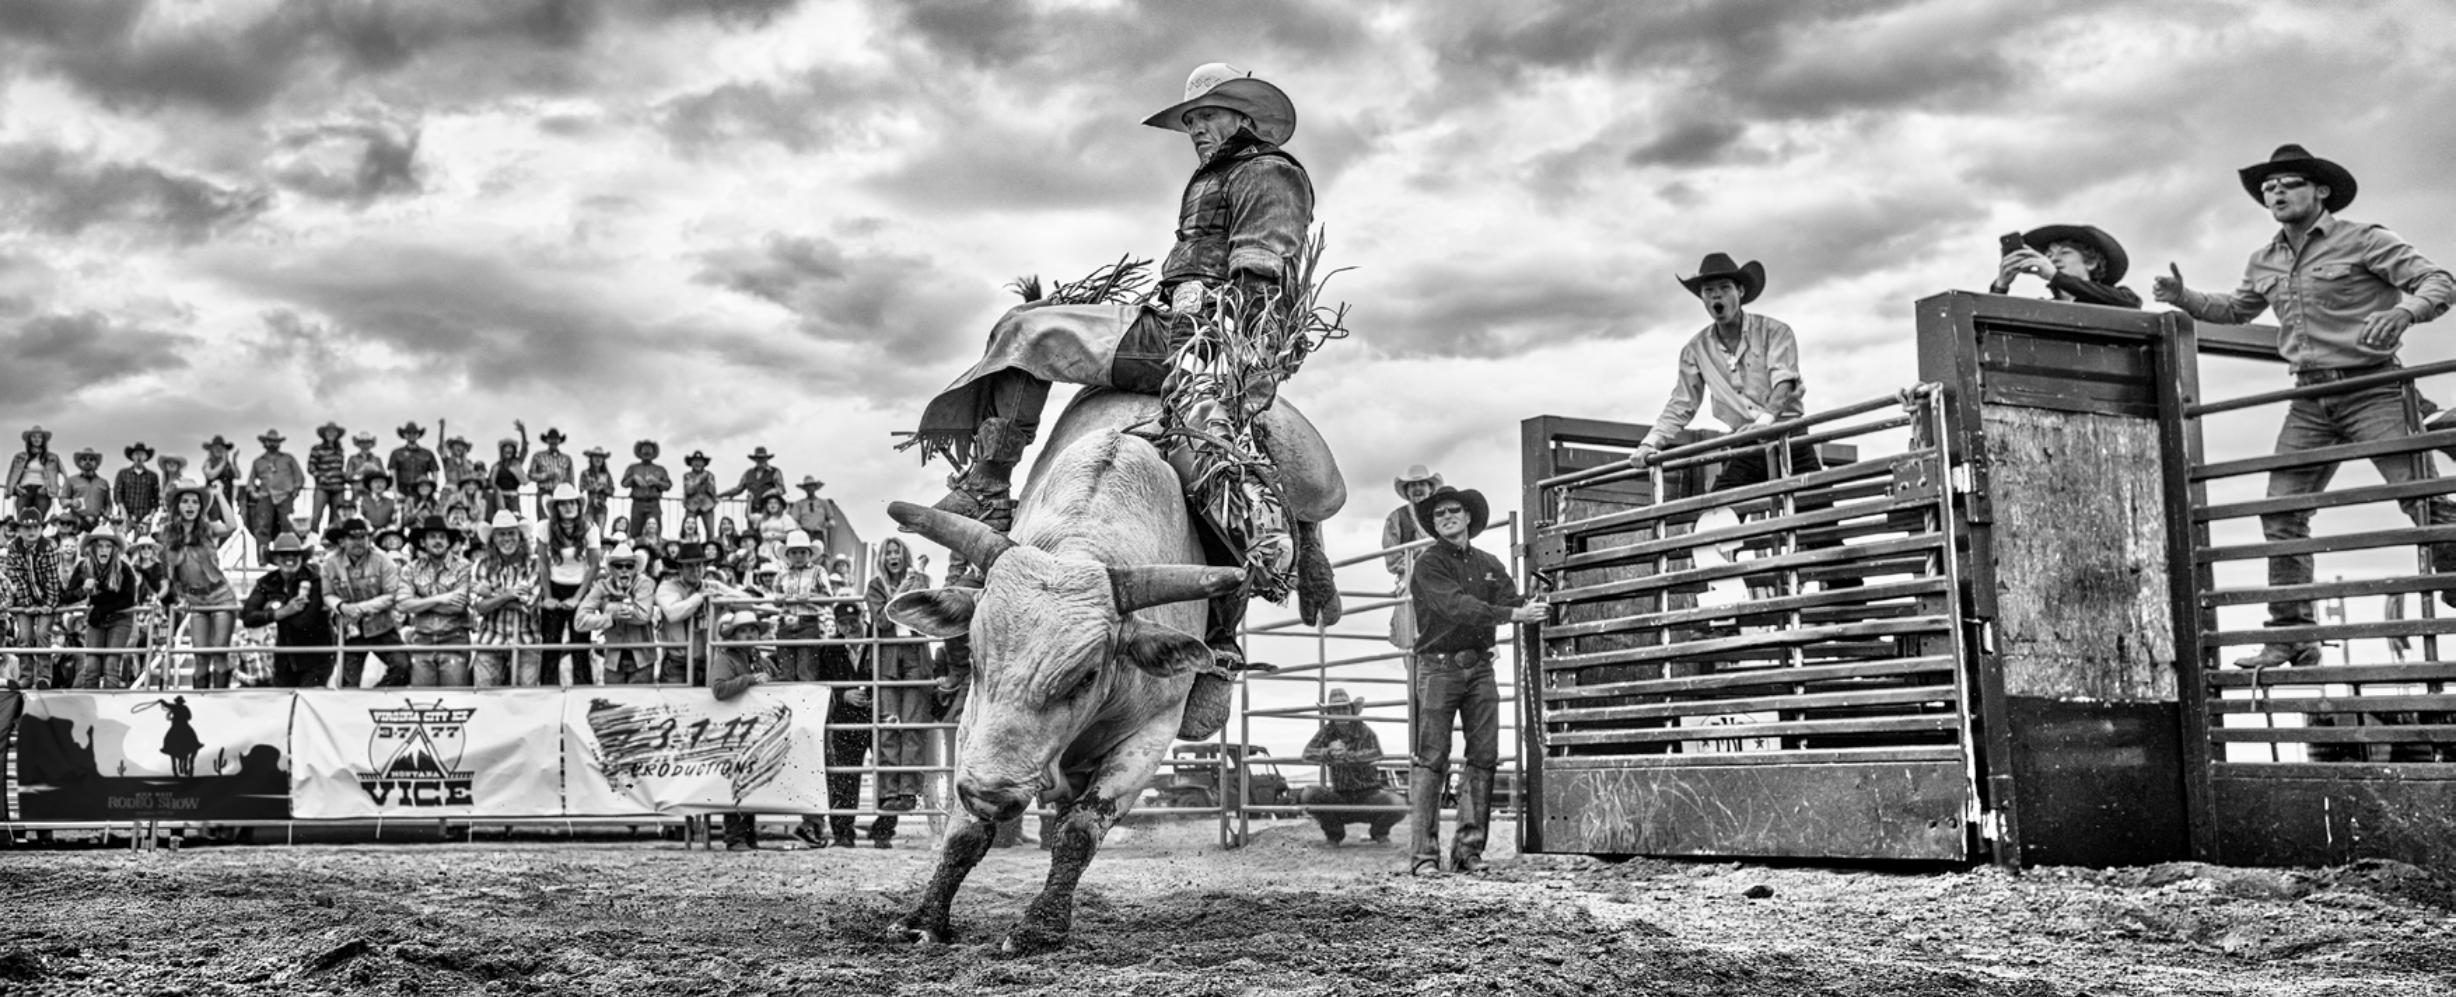 David Yarrow Figurative Photograph - 'Rodeo' - Cowboy on a Bull, fine art photography, 2023